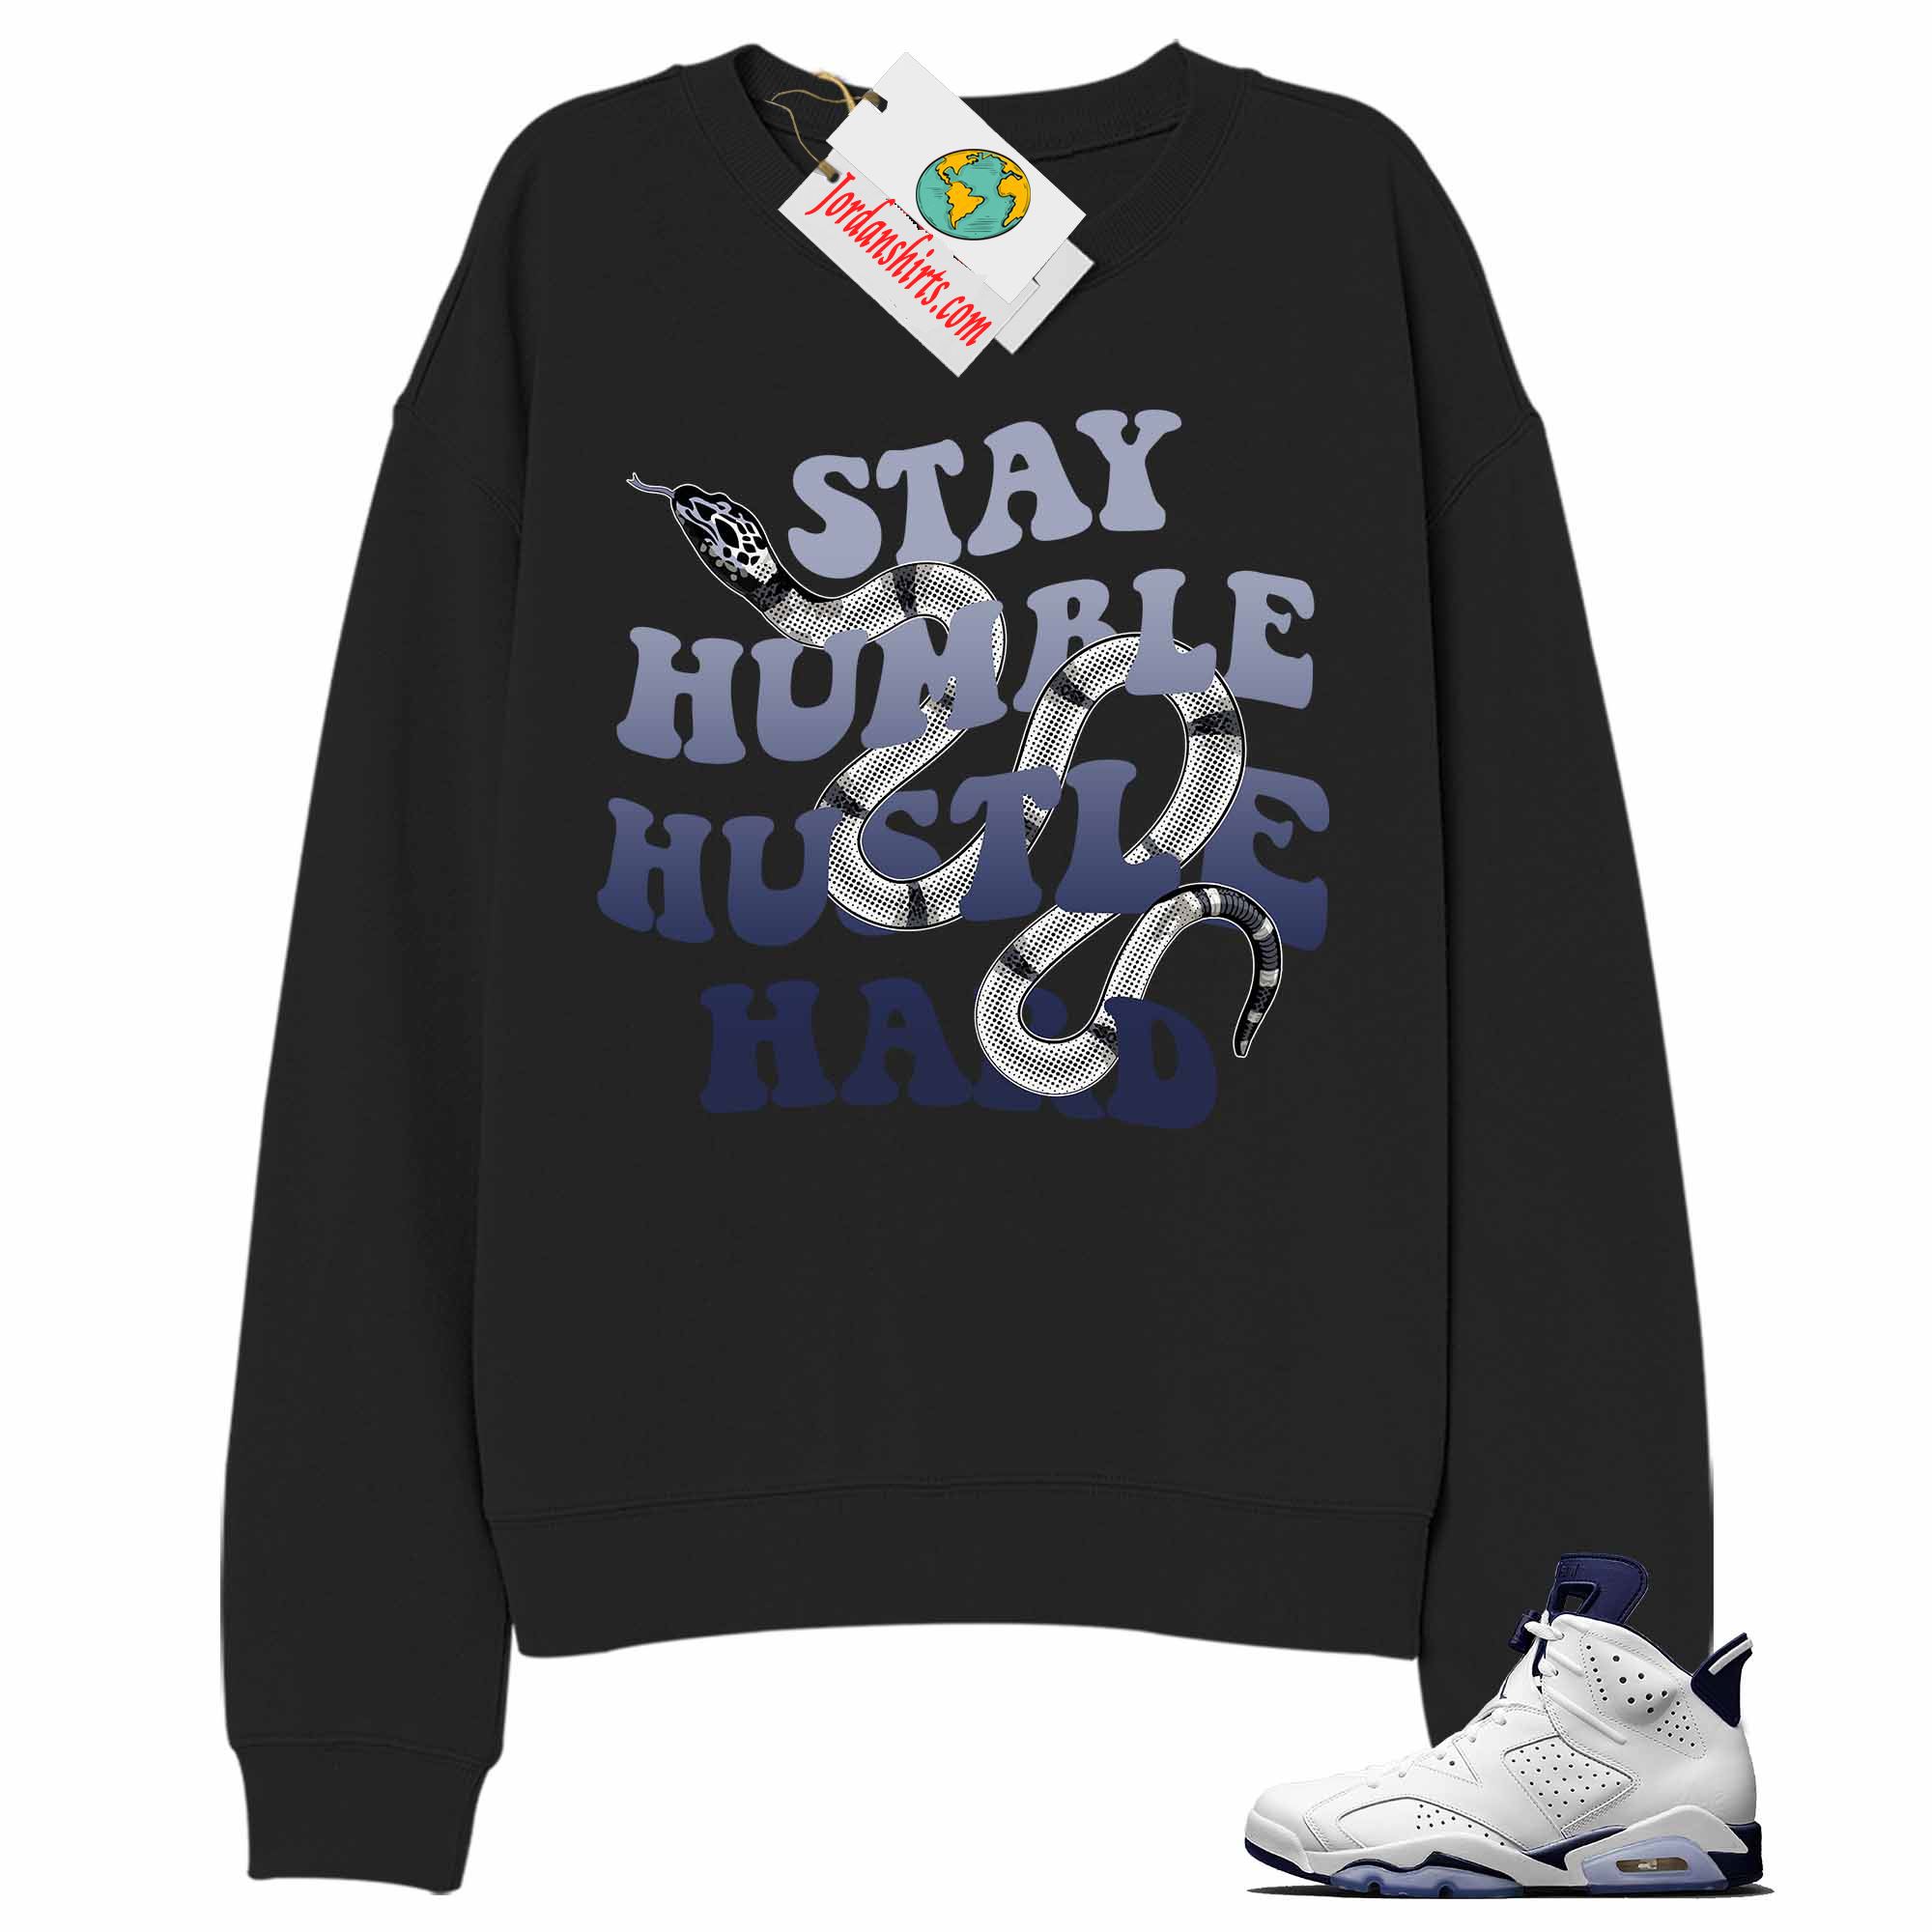 Jordan 6 Sweatshirt, Stay Humble Hustle Hard King Snake Black Sweatshirt Air Jordan 6 Midnight Navy 6s Full Size Up To 5xl